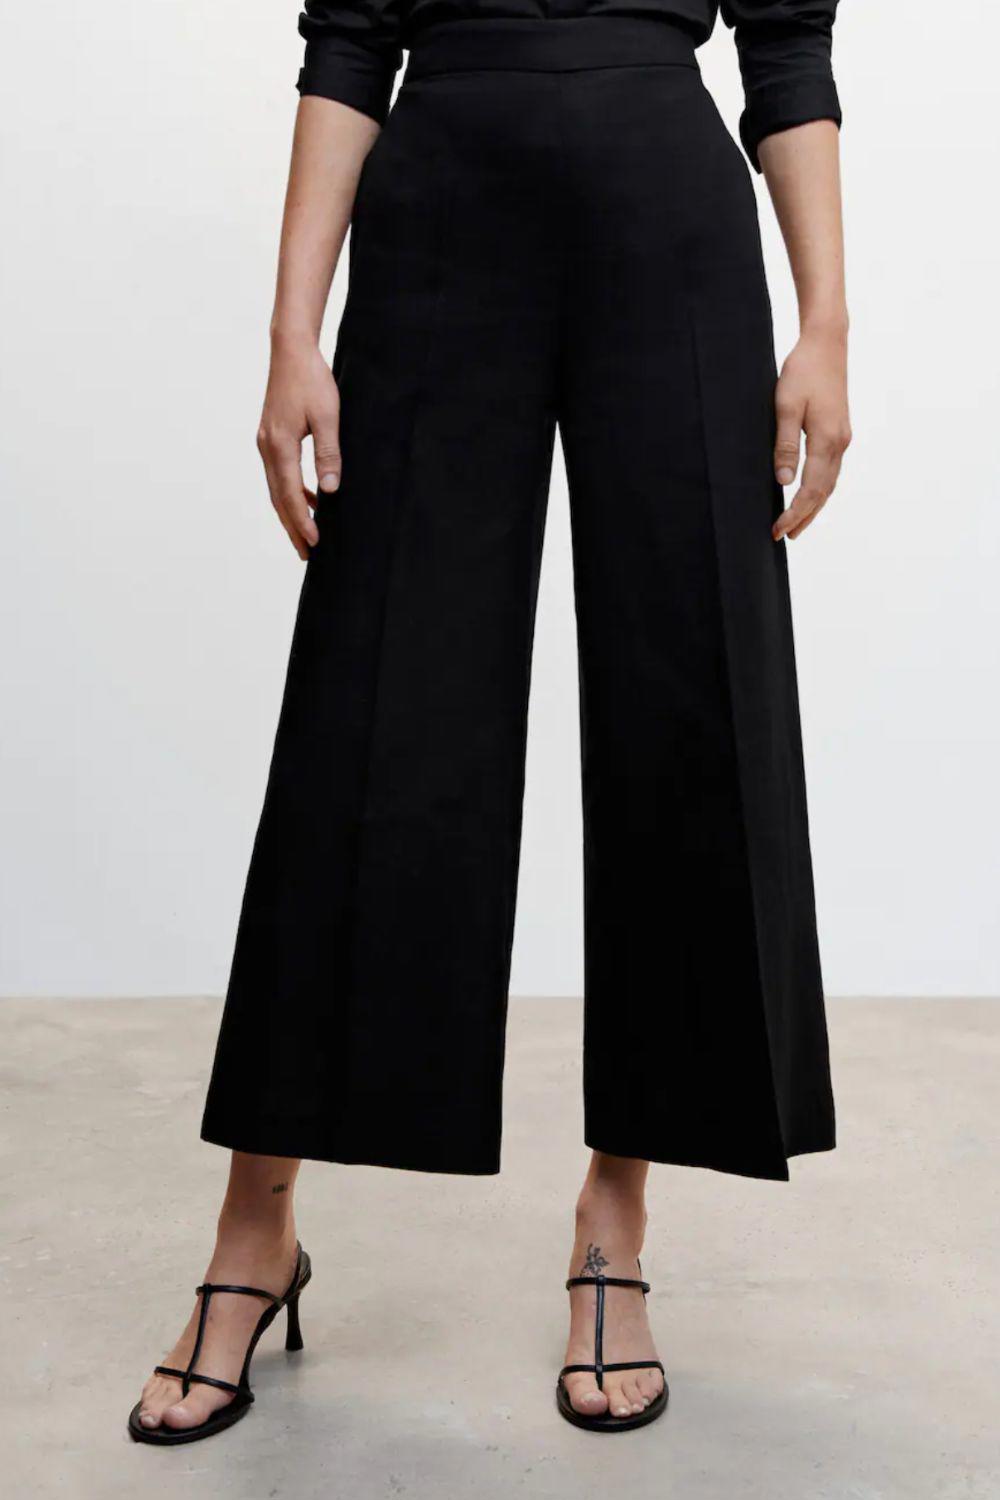 pantalones culotte negros 3